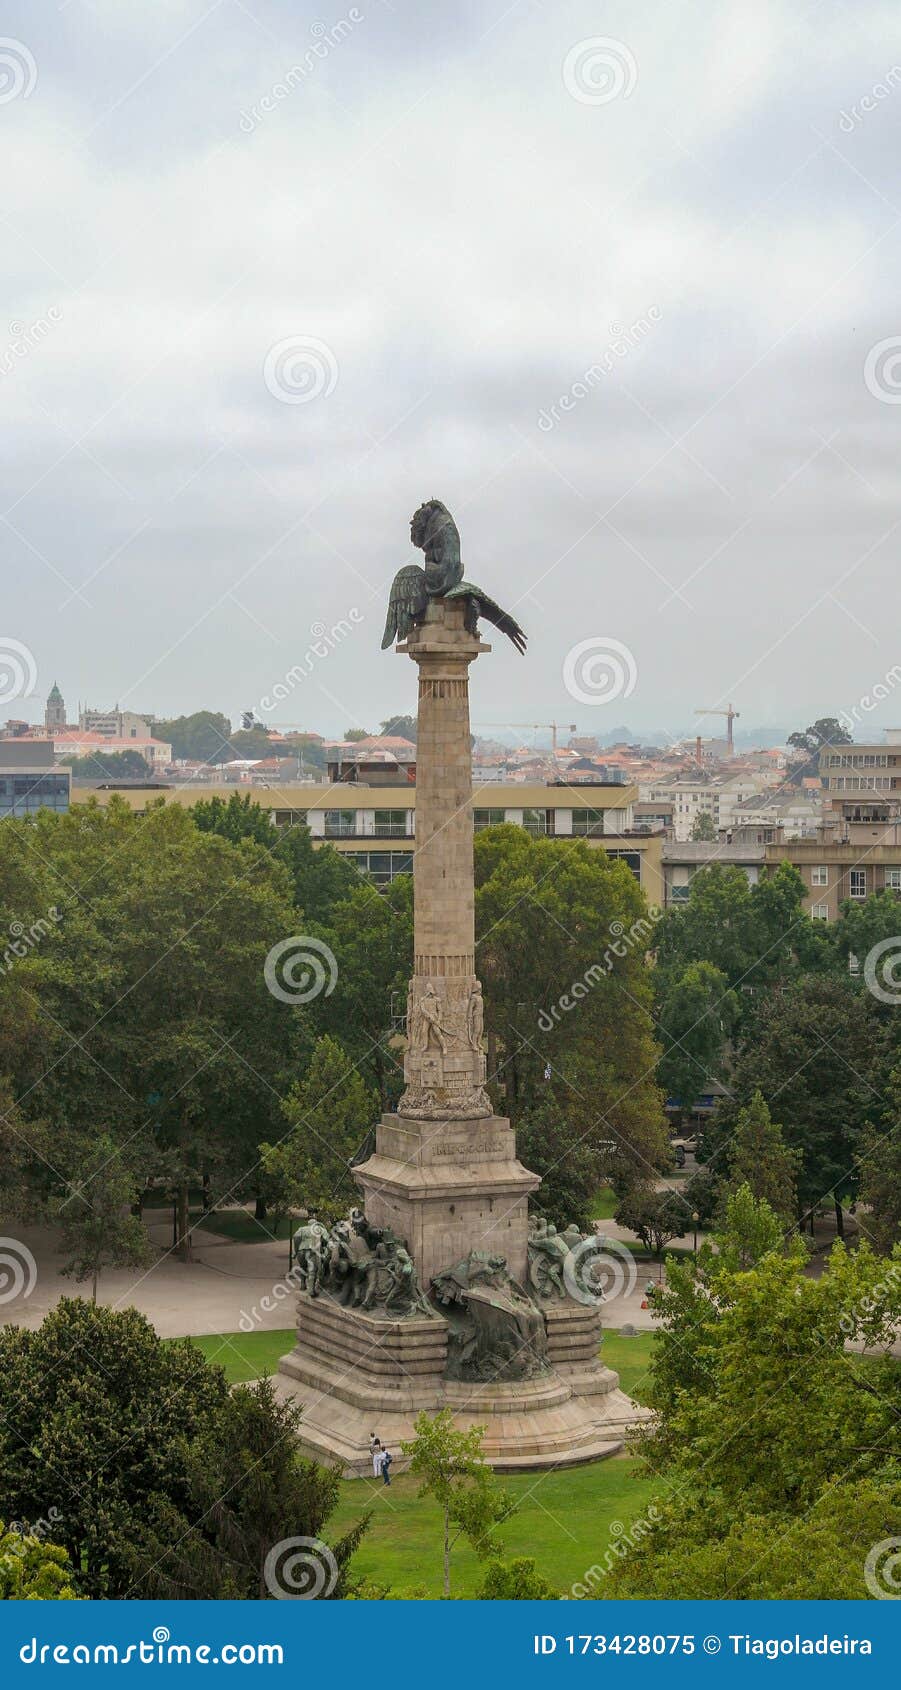 the lion and the eagle on the boavista roundabout, porto, portugal